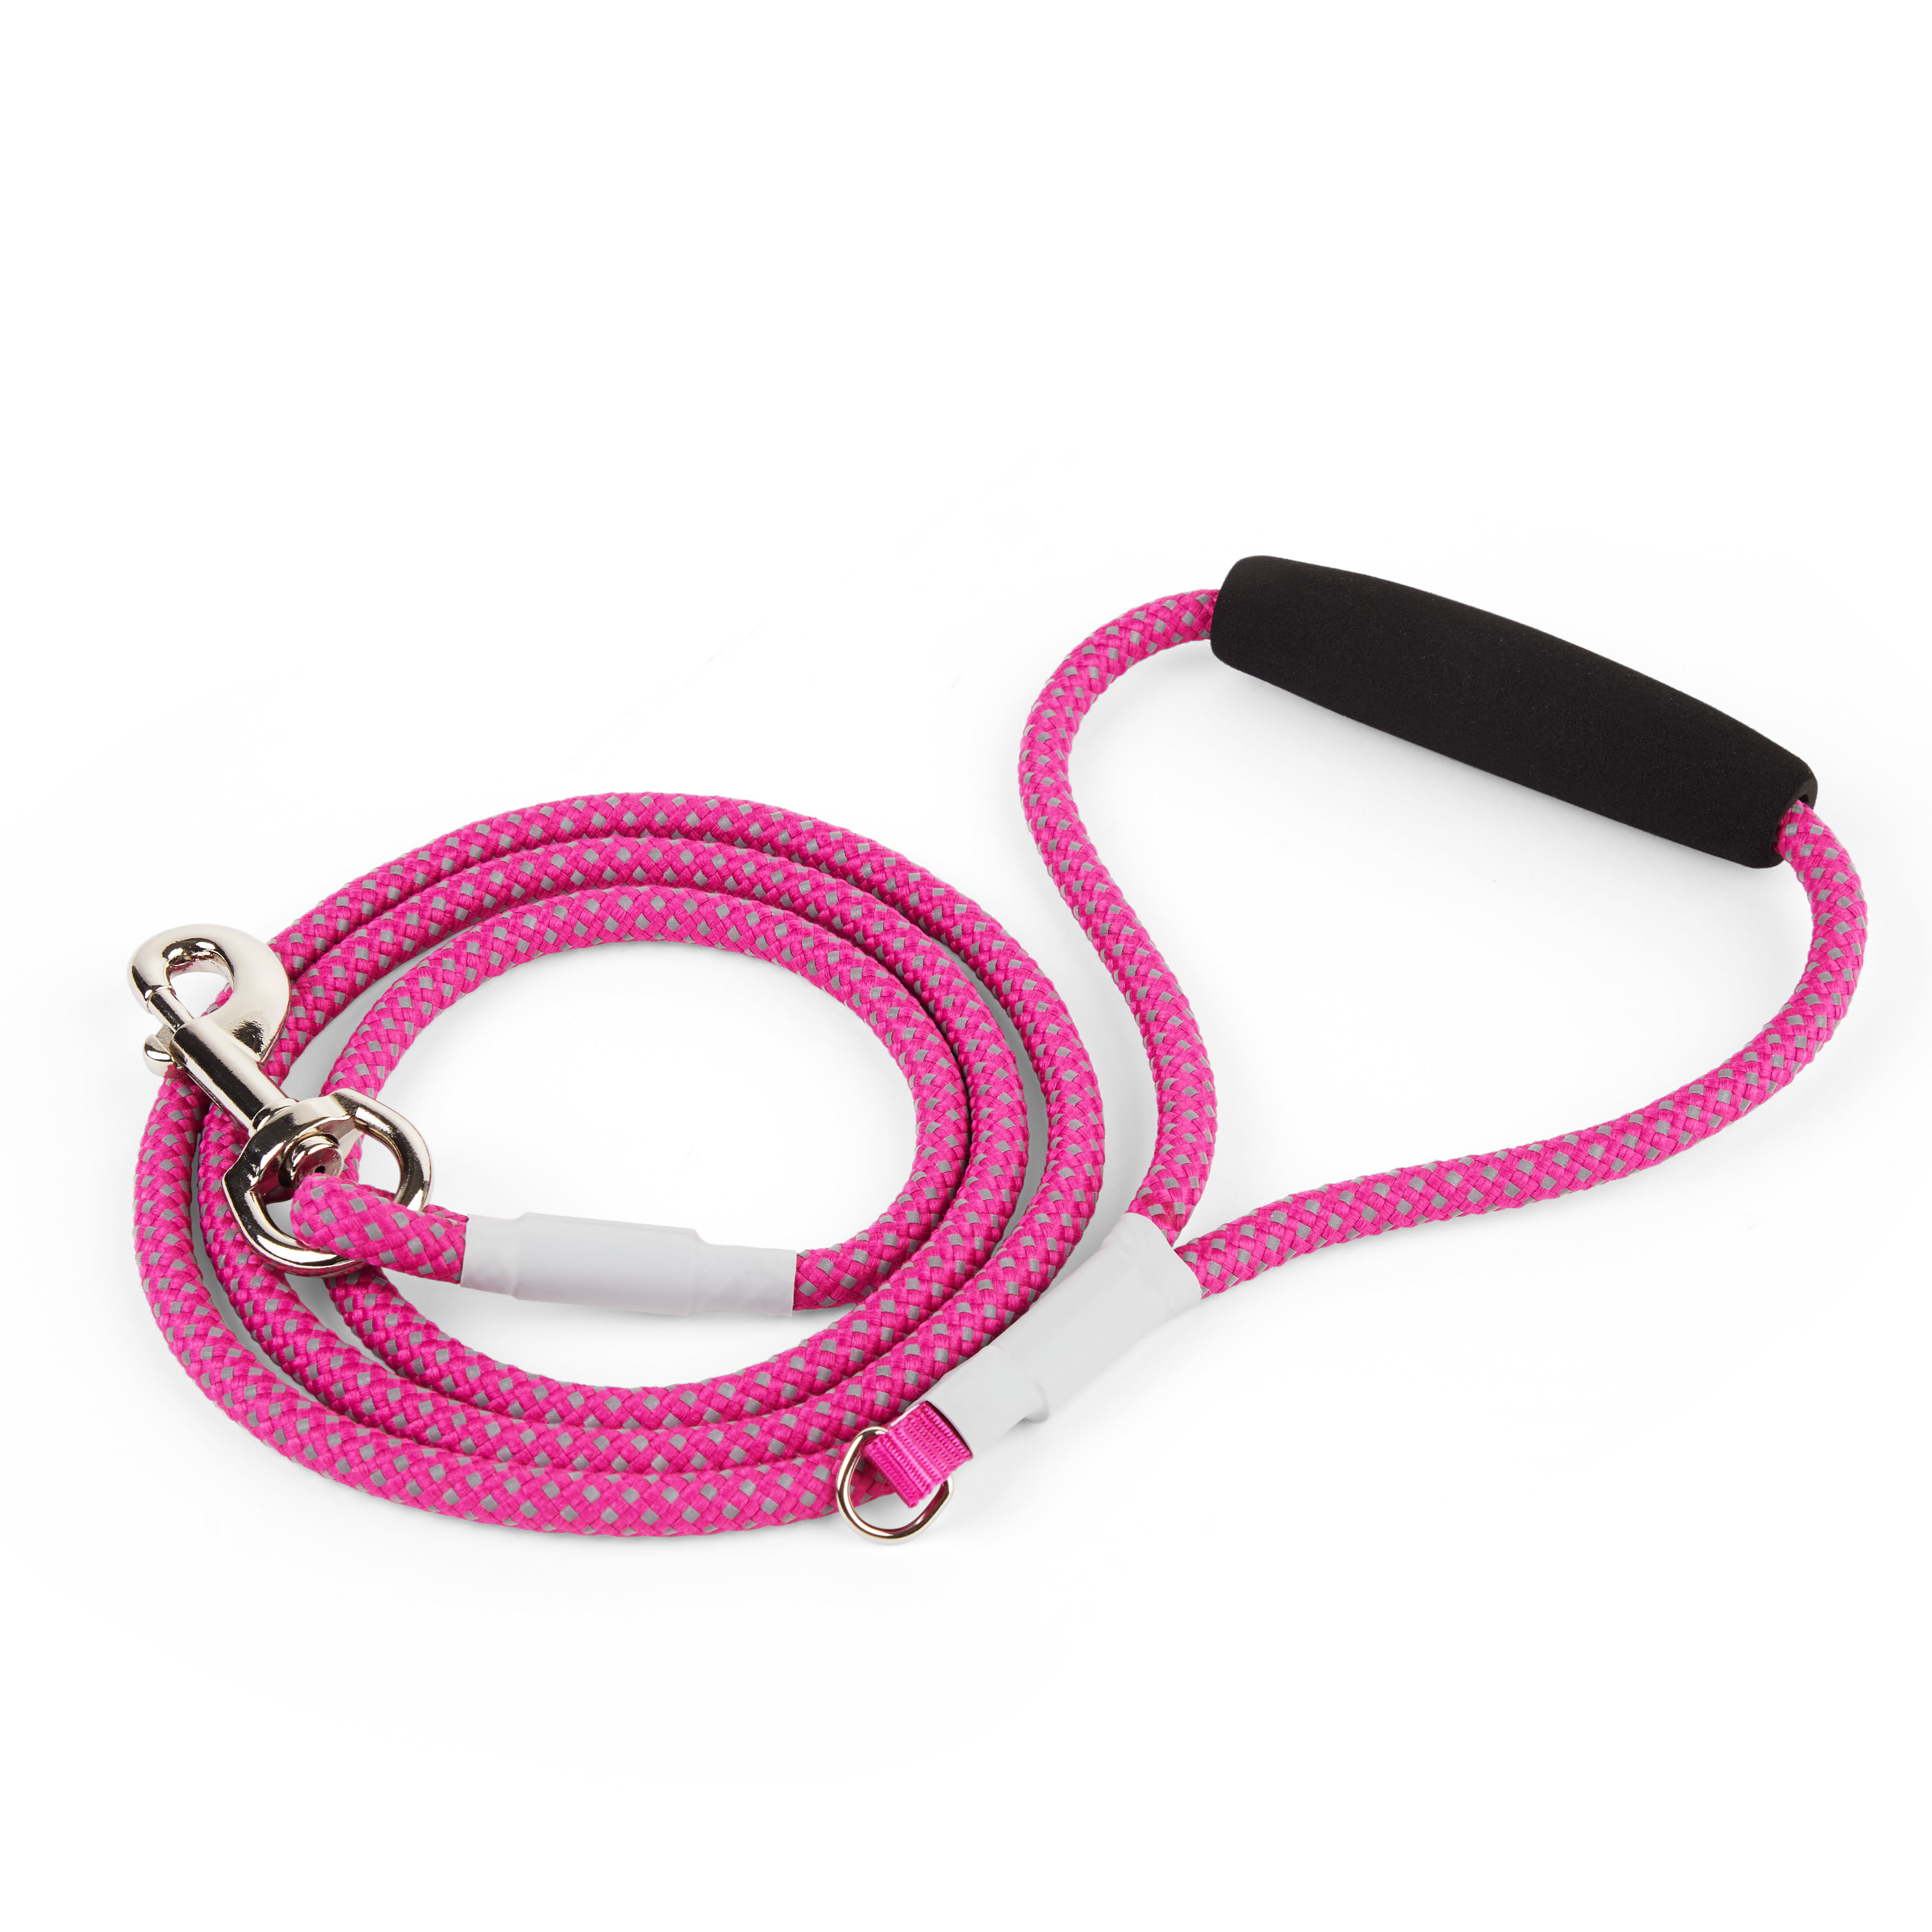 Top Paw® Light Pink Slip Lead Dog Leash: 5-ft long